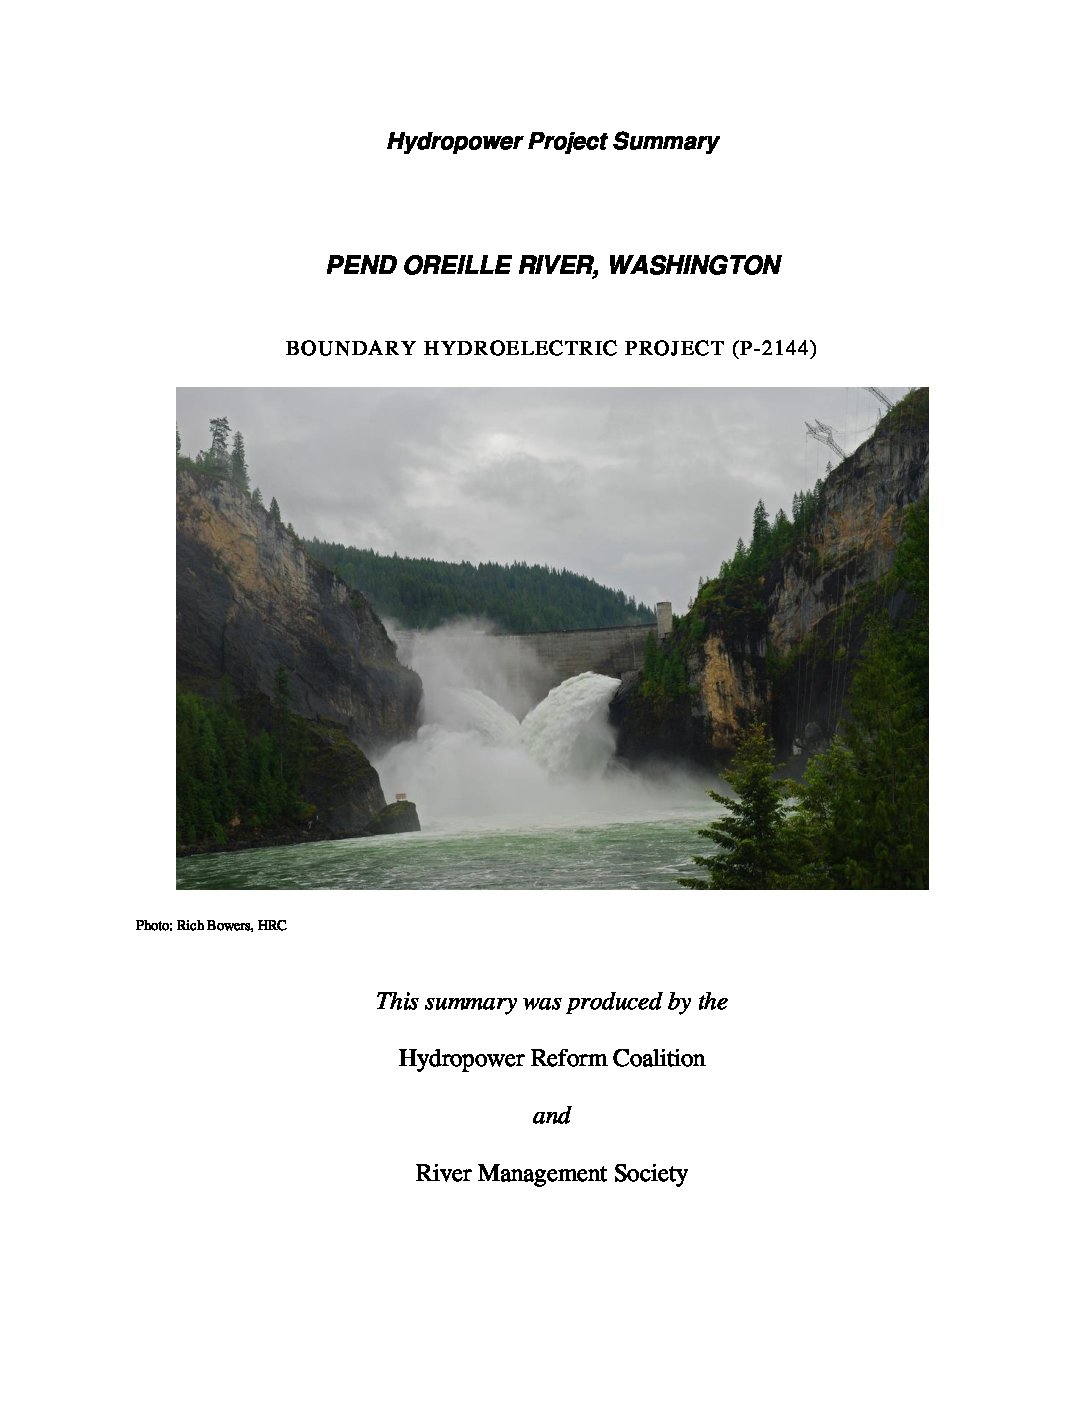 Boundary Dam Project, Pend Oreille River, Washington